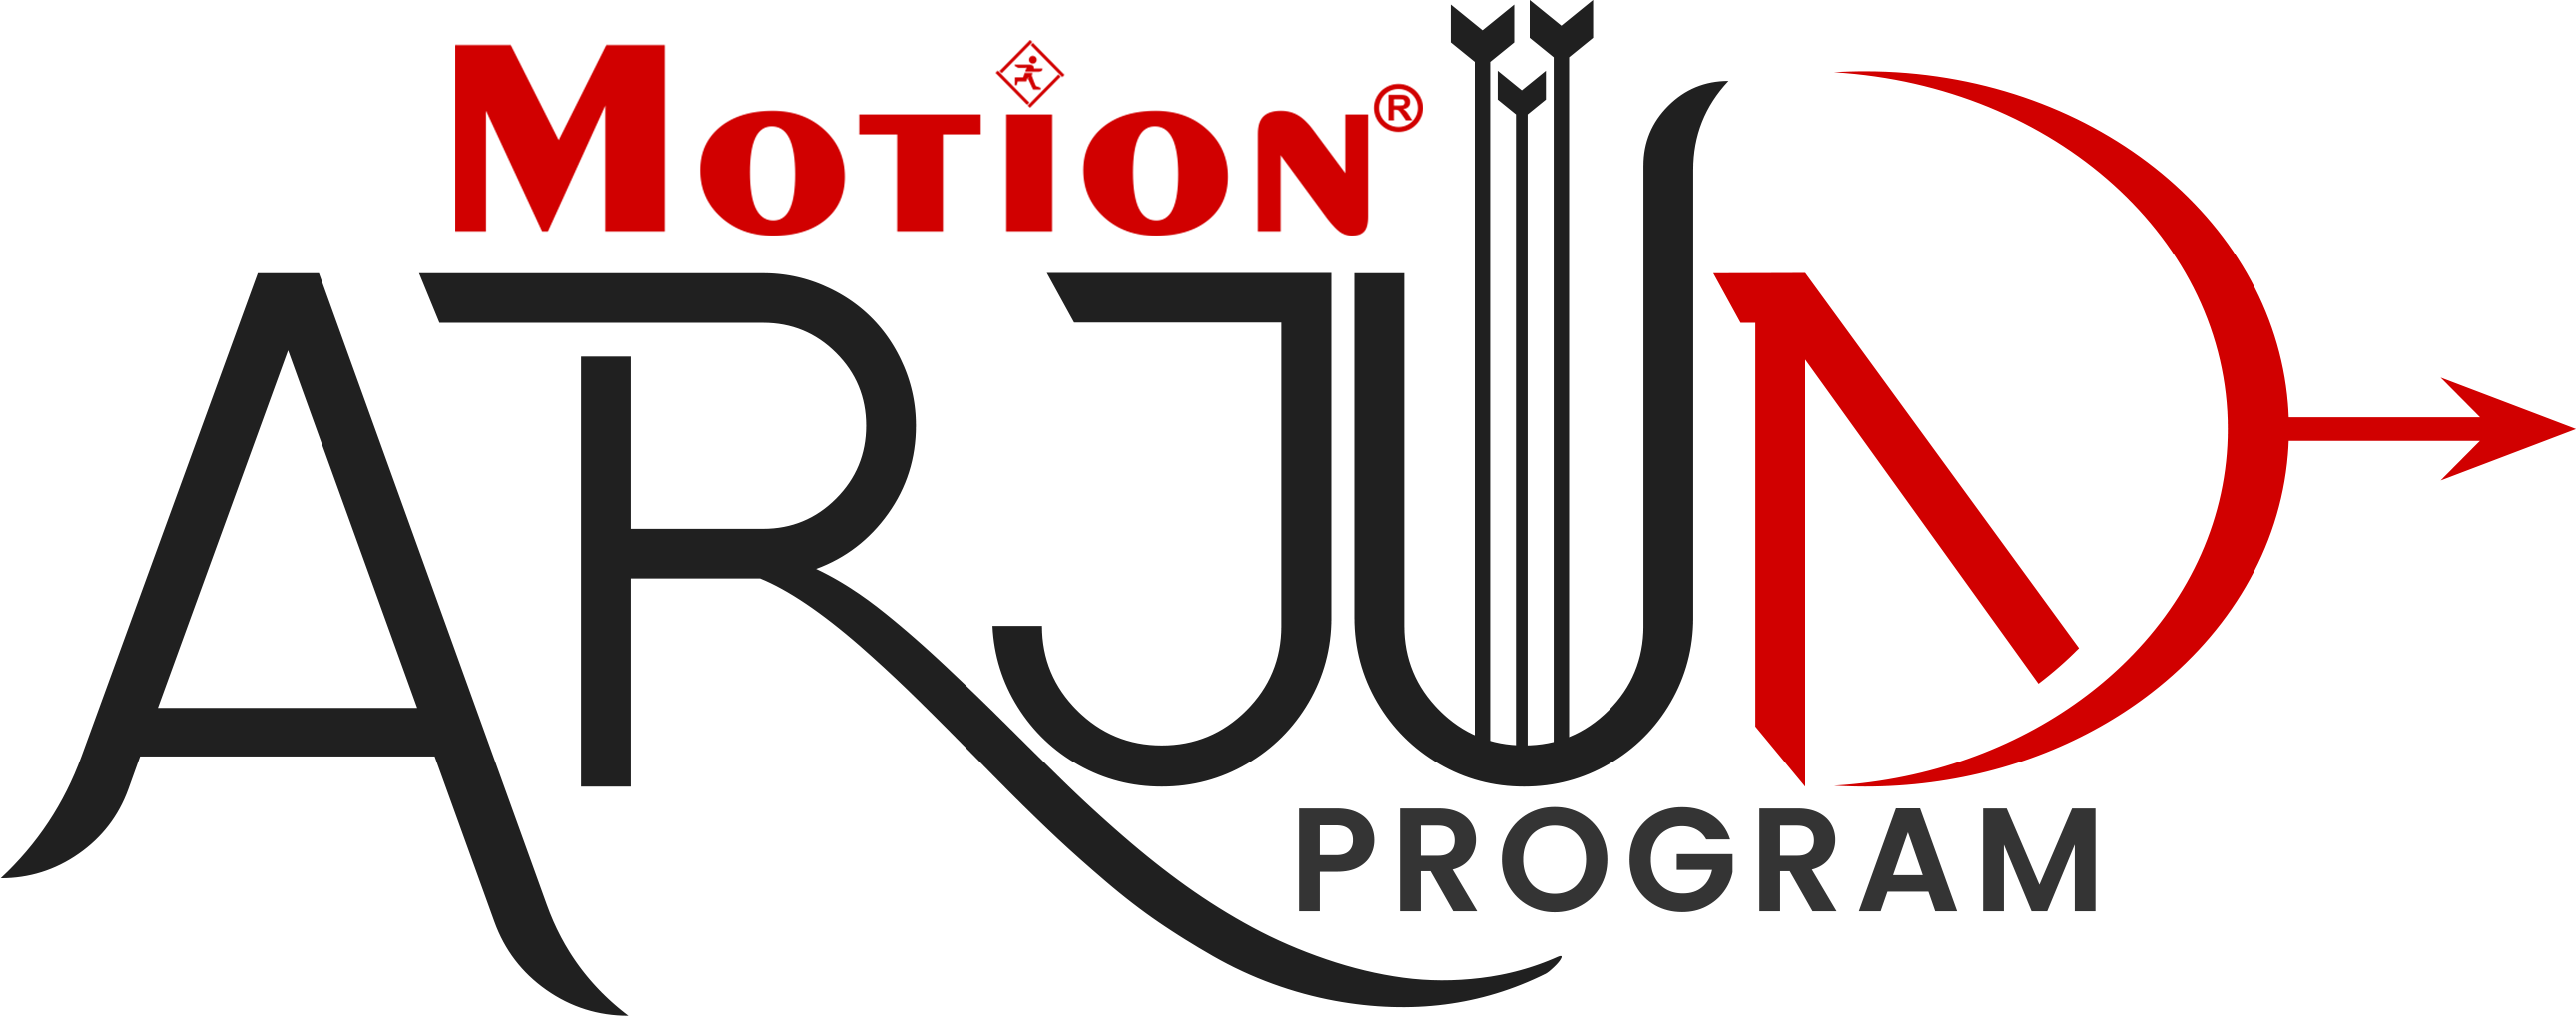 Motion Arjun logo